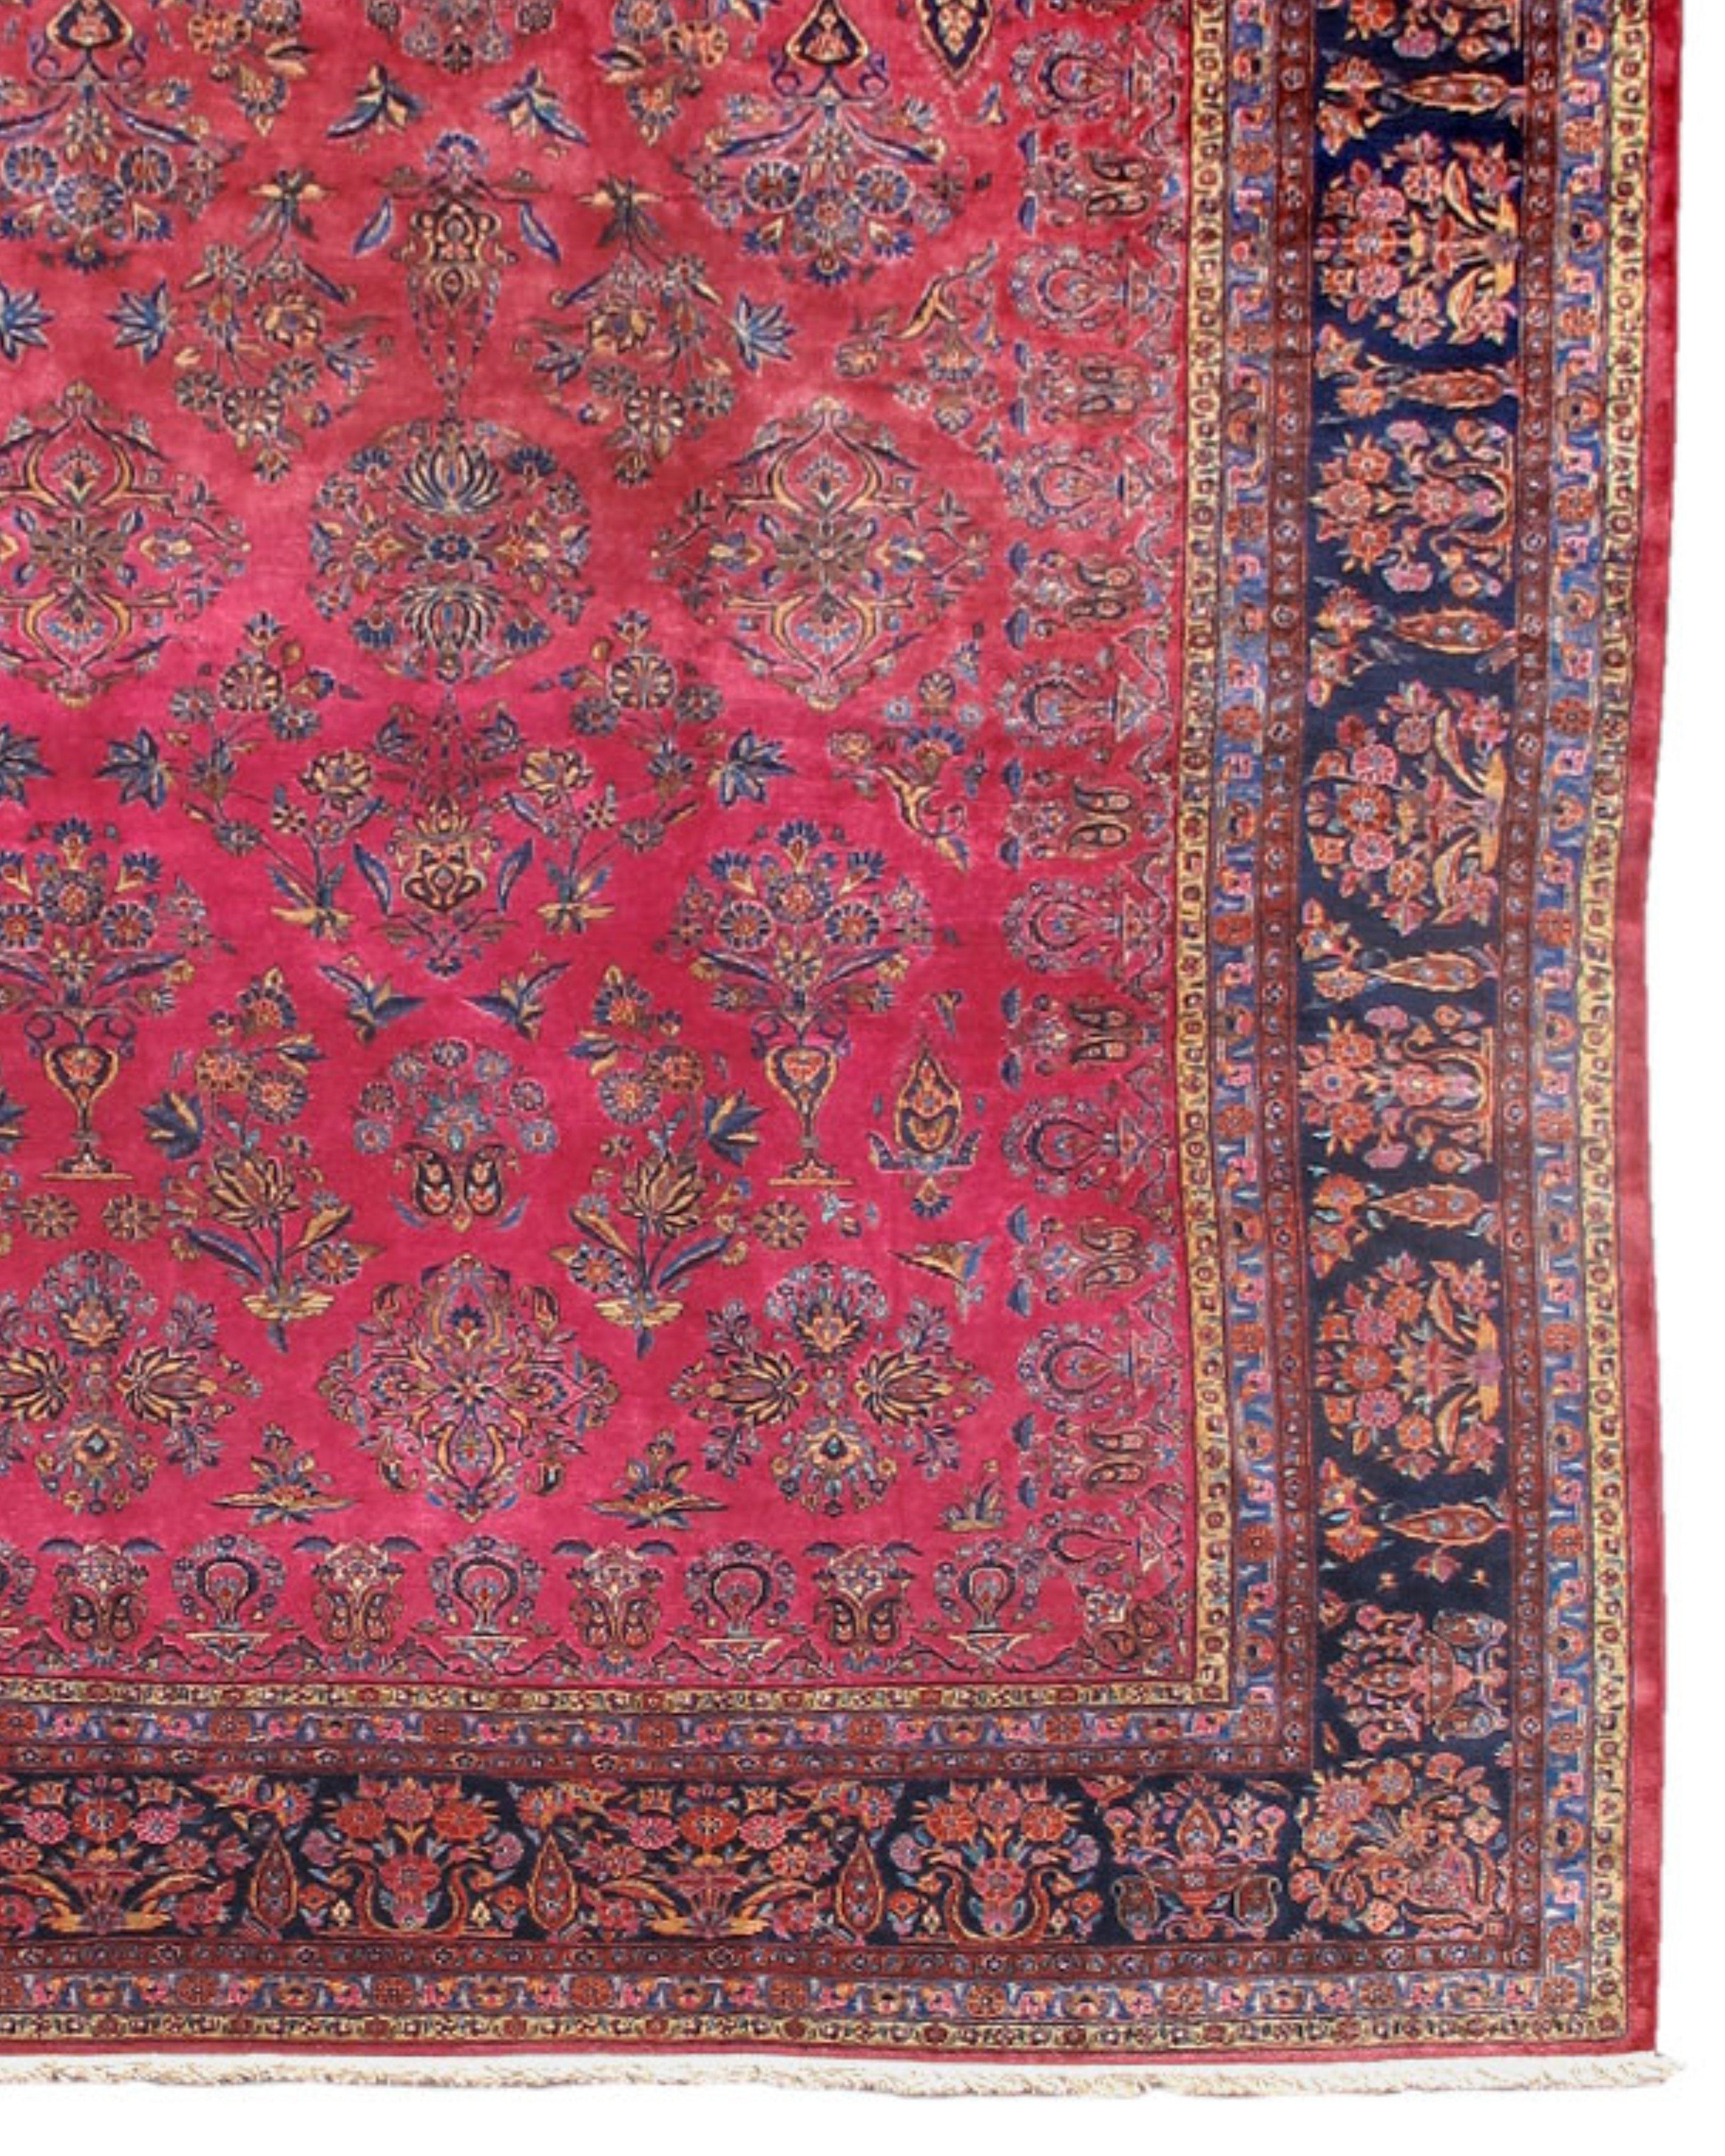 20th Century Large Antique Persian Kashan Carpet, c. 1930 For Sale